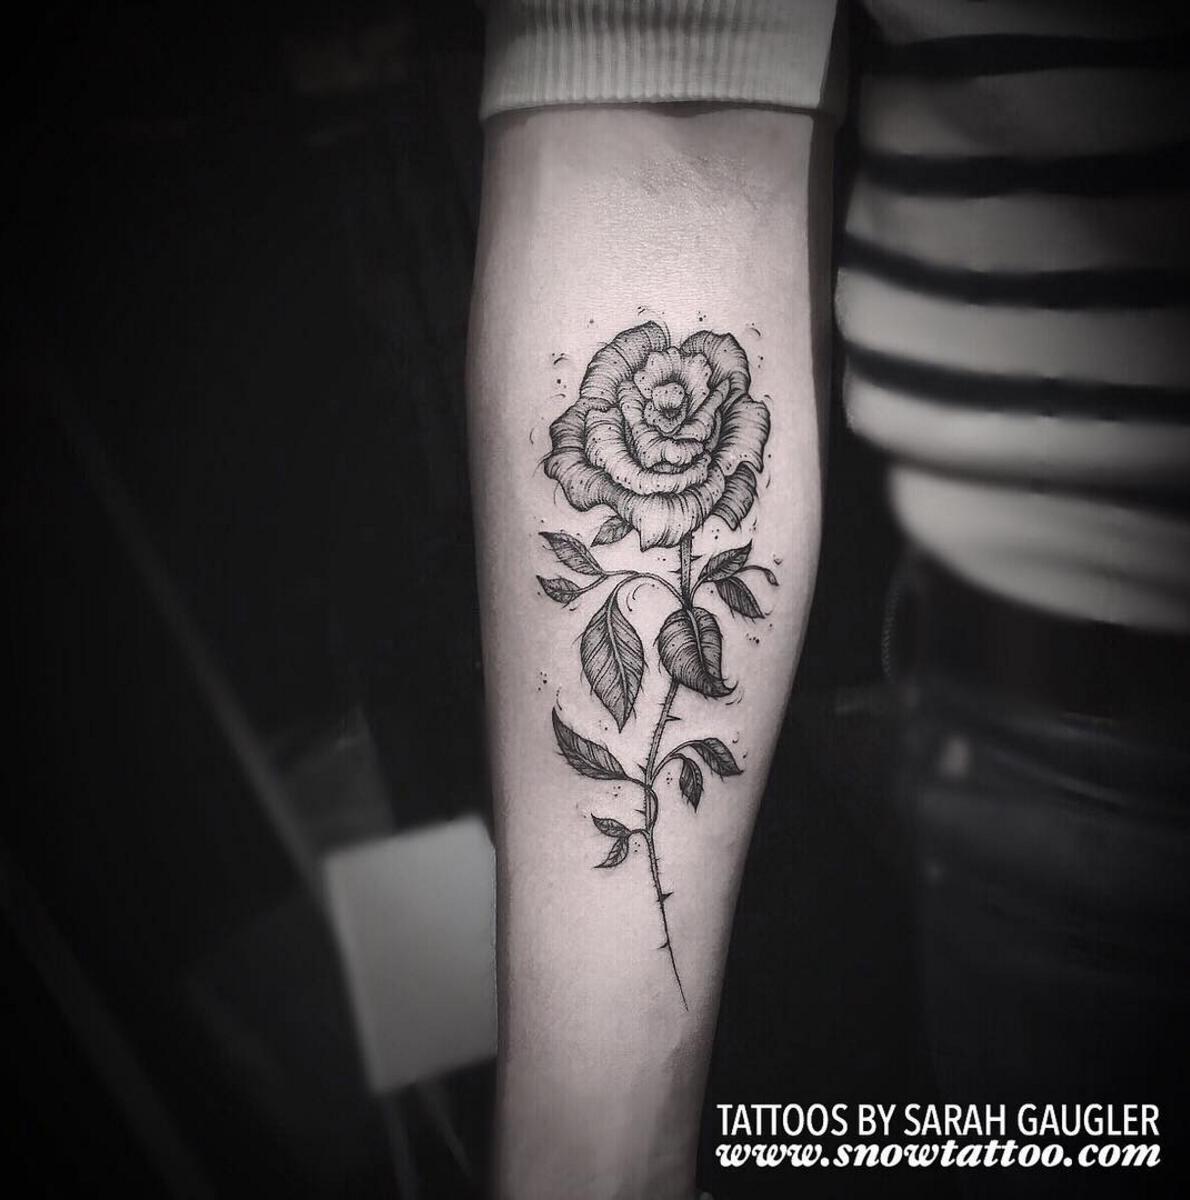 Sarah Gaugler Snow Tattoo Custom Original Authentic Rose Signature Design Linework Fine Line Finelines Detailed Intricate New York Best Tattoos Best Tattoo Artist NYC.png